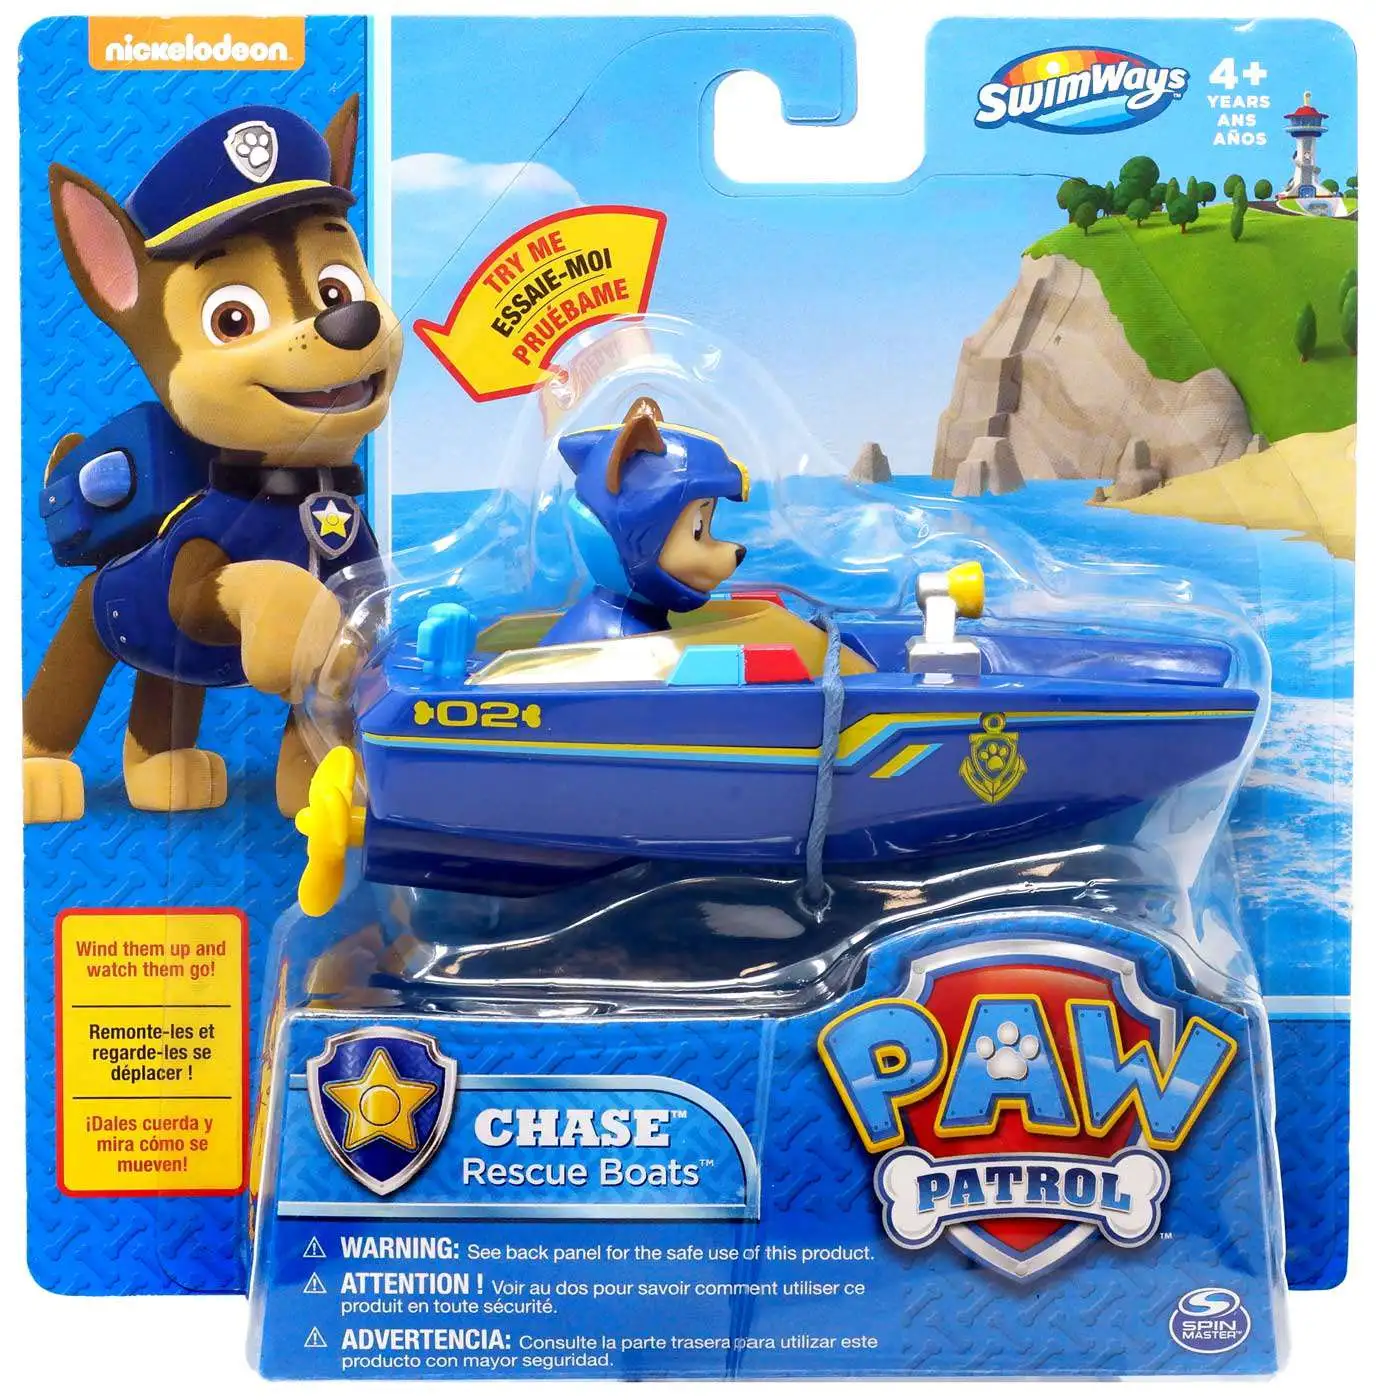 Nickelodeon Paw Patrol Sea Patrol Chase Character Mask Blue Swimways  New 